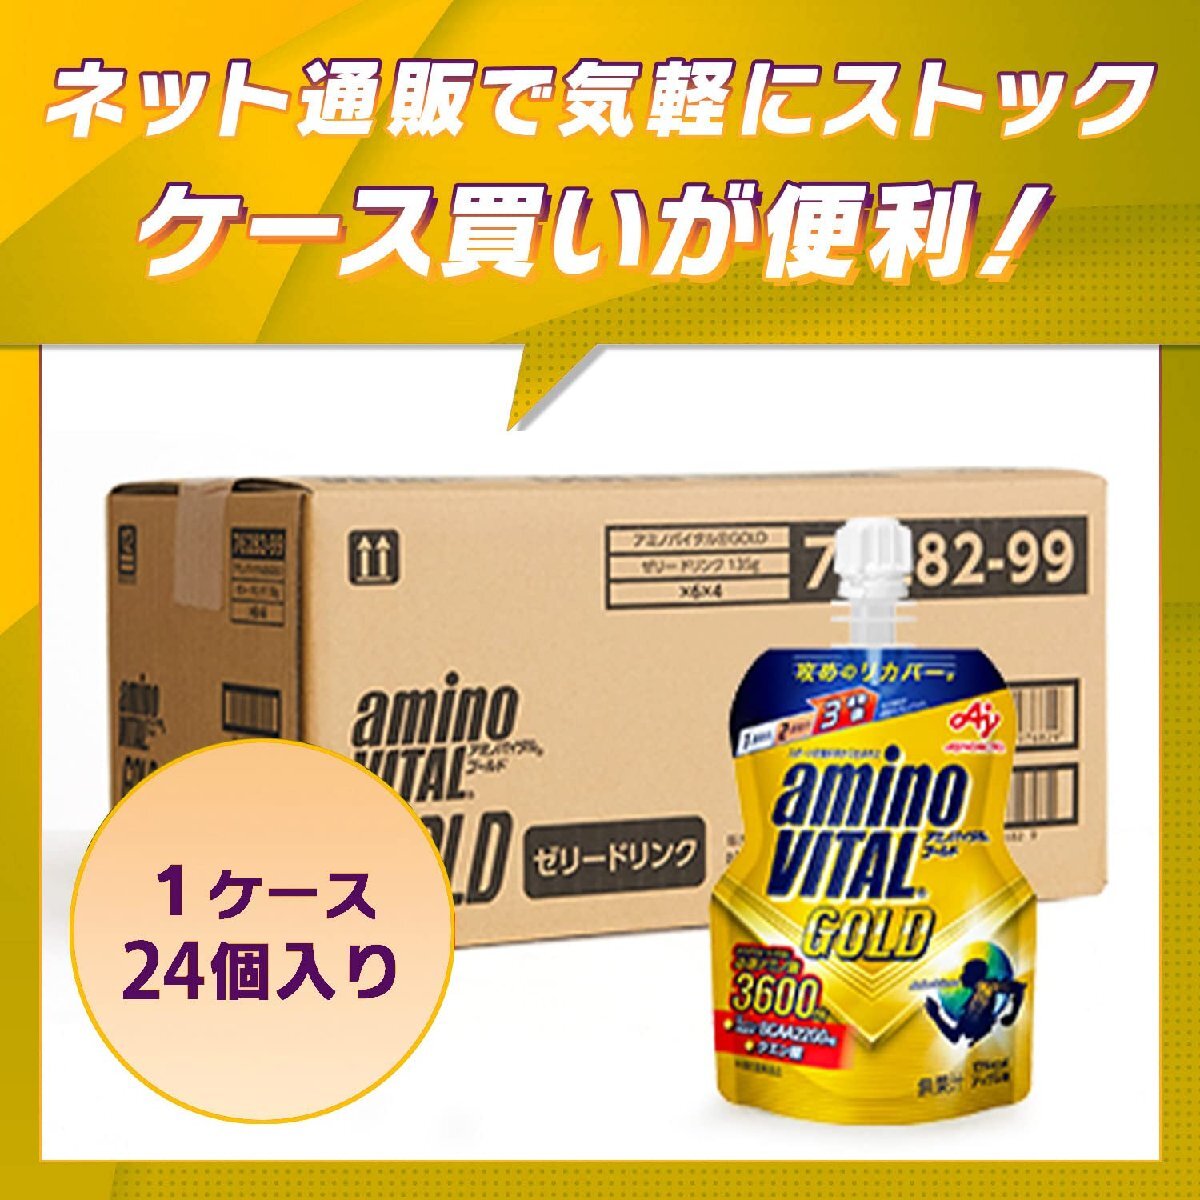  Ajinomoto amino baitaru jelly drink GOLD Apple taste 135g×6 piece amino acid 3600mg citric acid 675mg BCAA EAA.